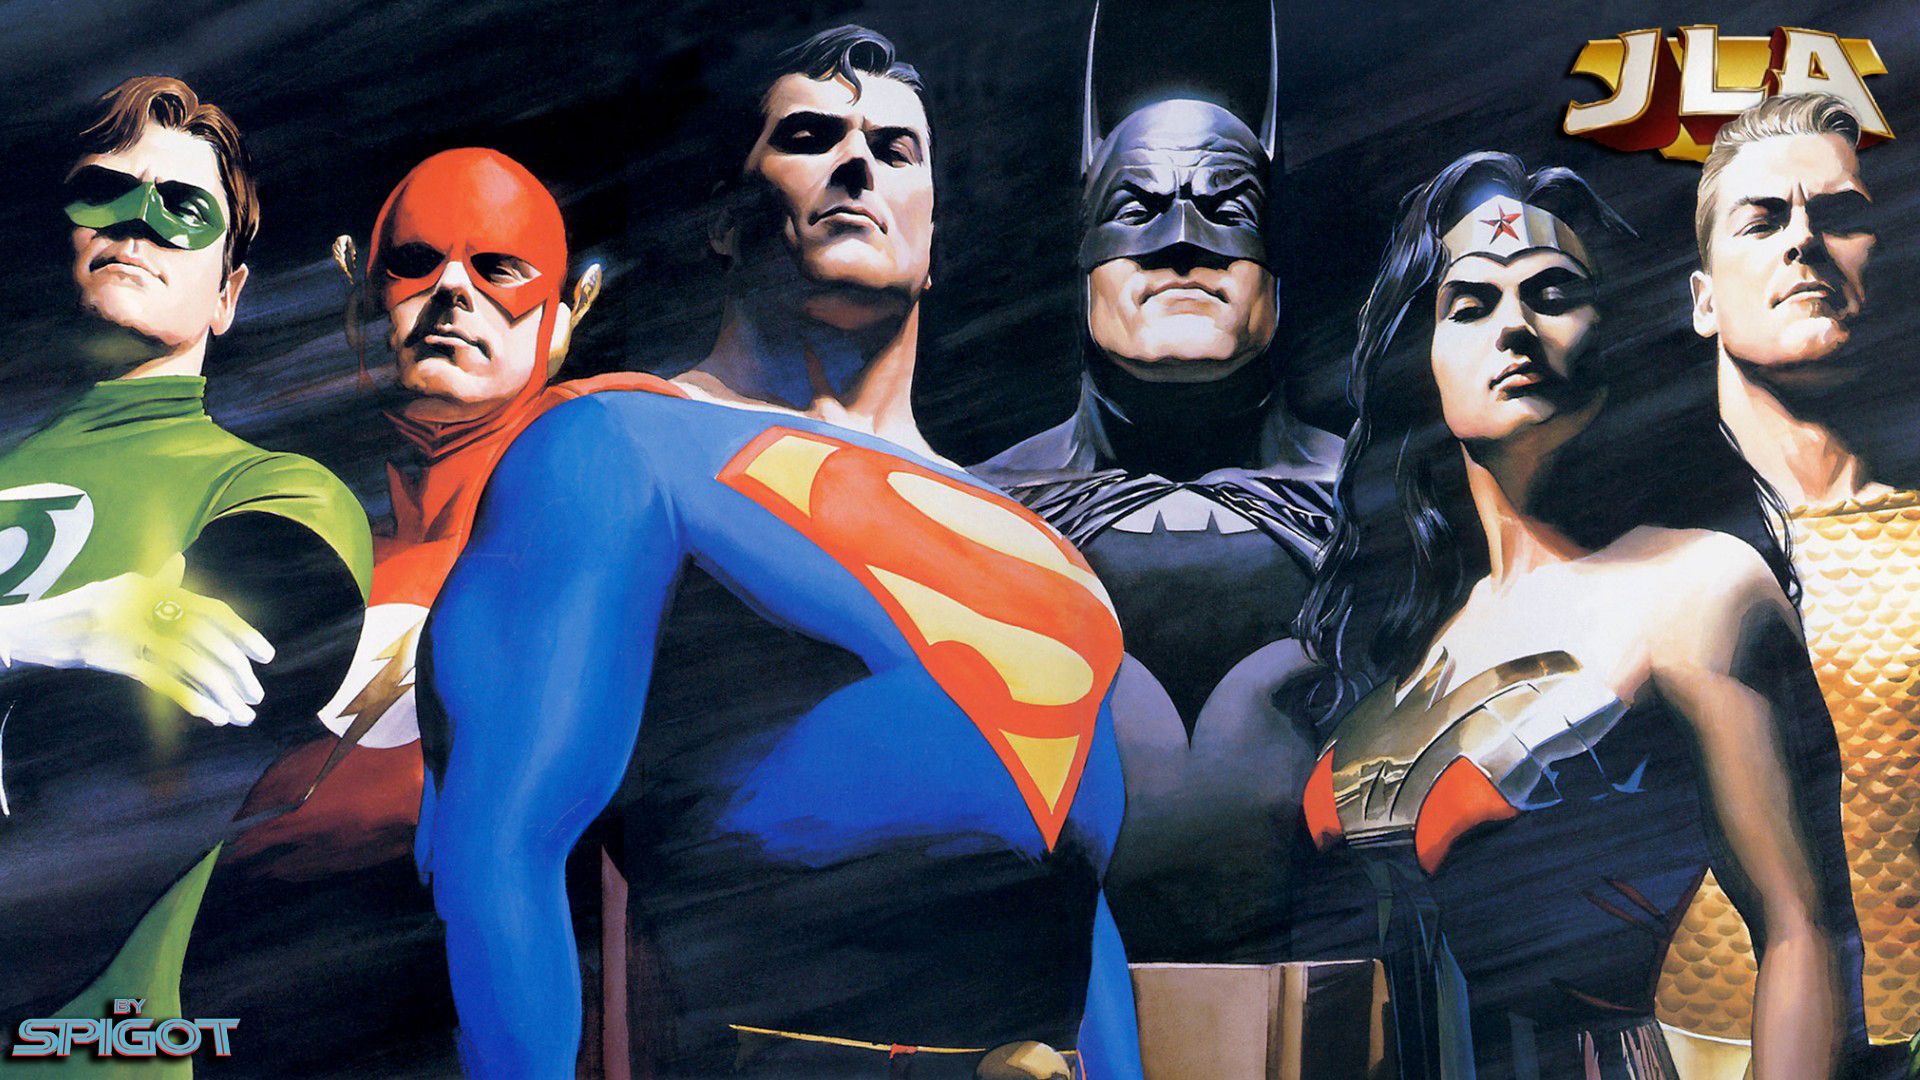 Justice League Wallpaper. George Spigot's Blog